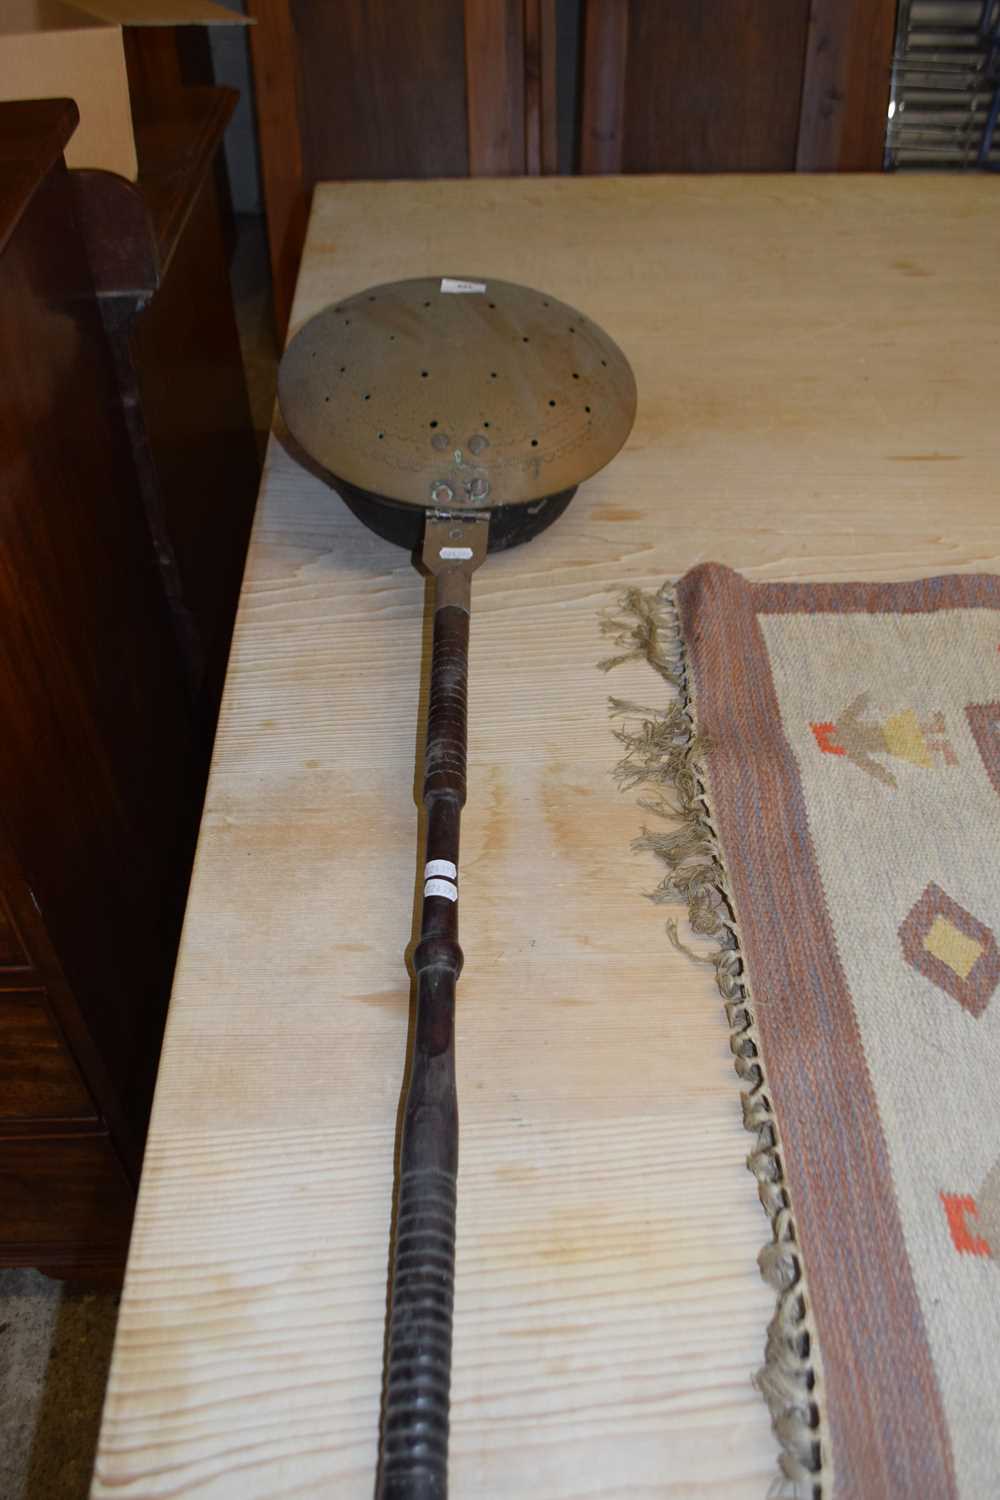 Vintage bed warming pan on turned handle